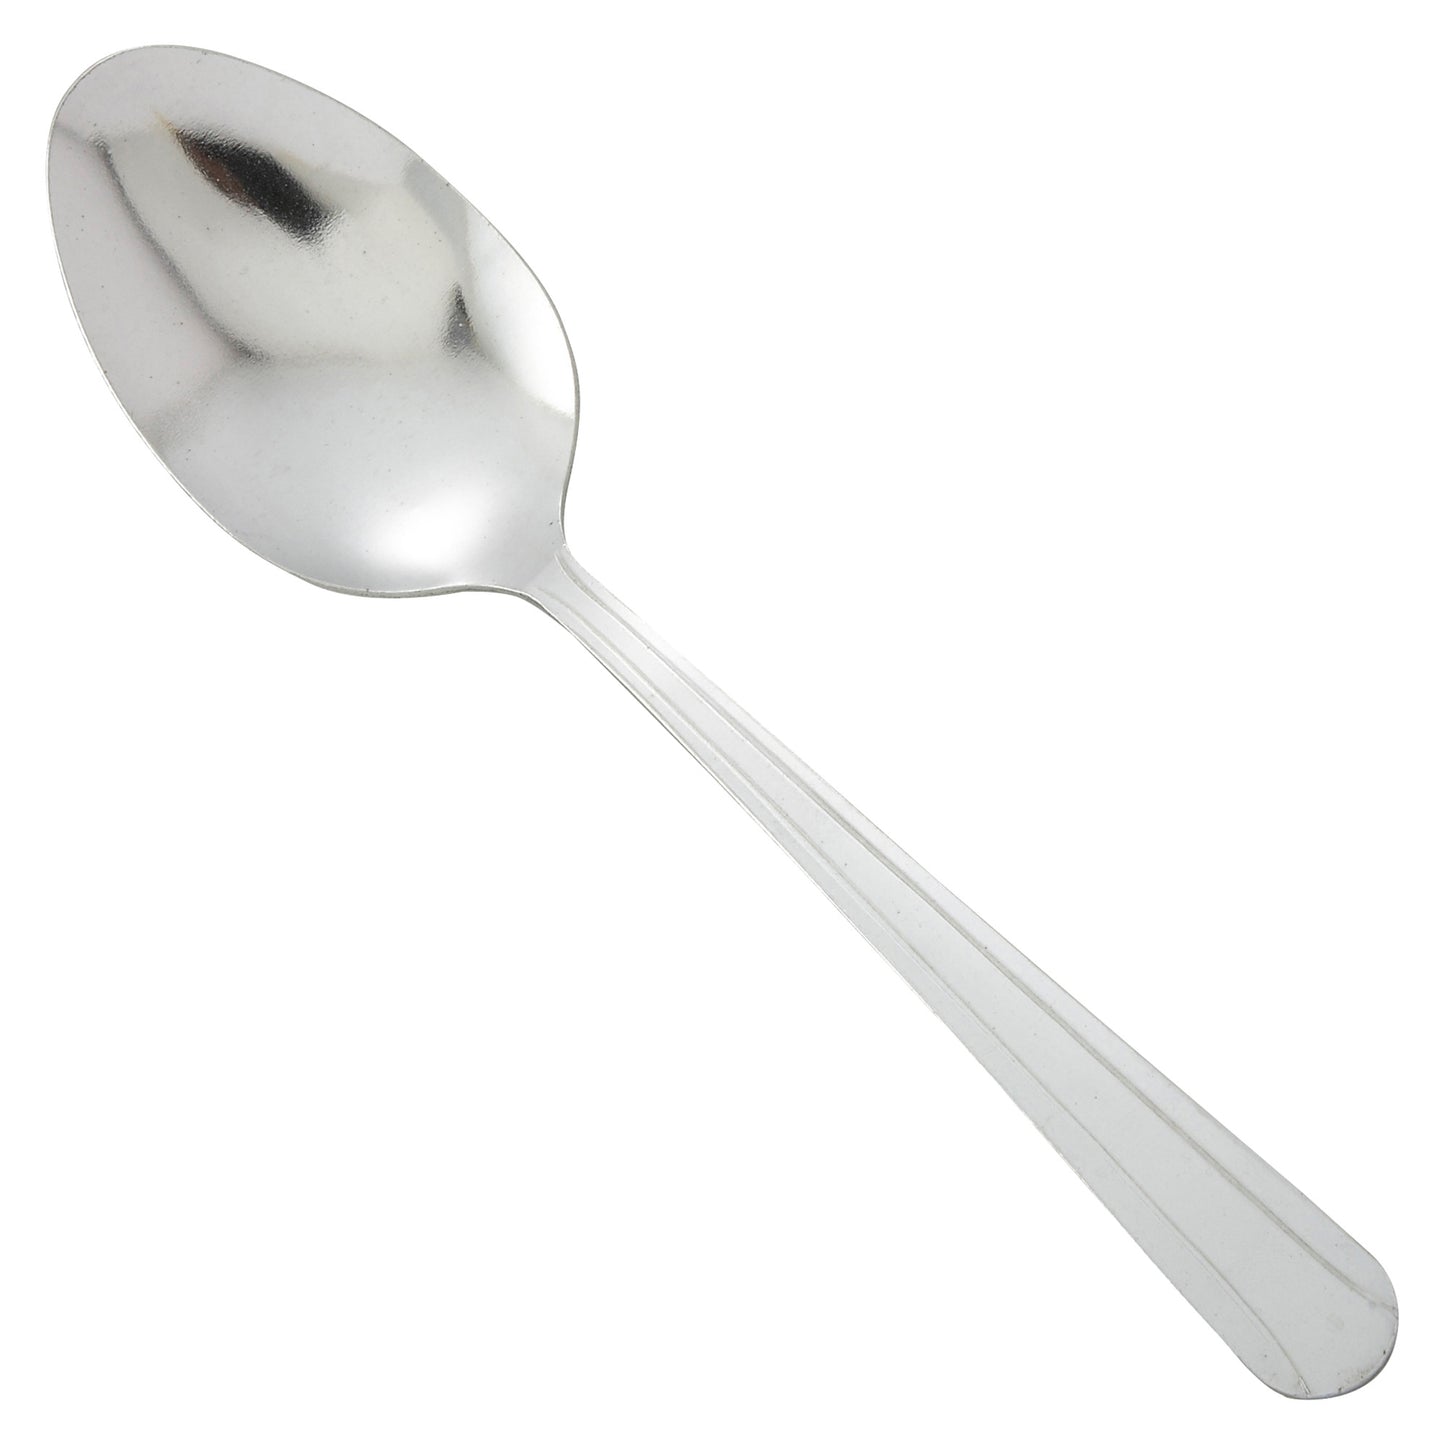 0081-03 - Dominion Dinner Spoon, 2-doz/pk, 18/0 Medium Weight